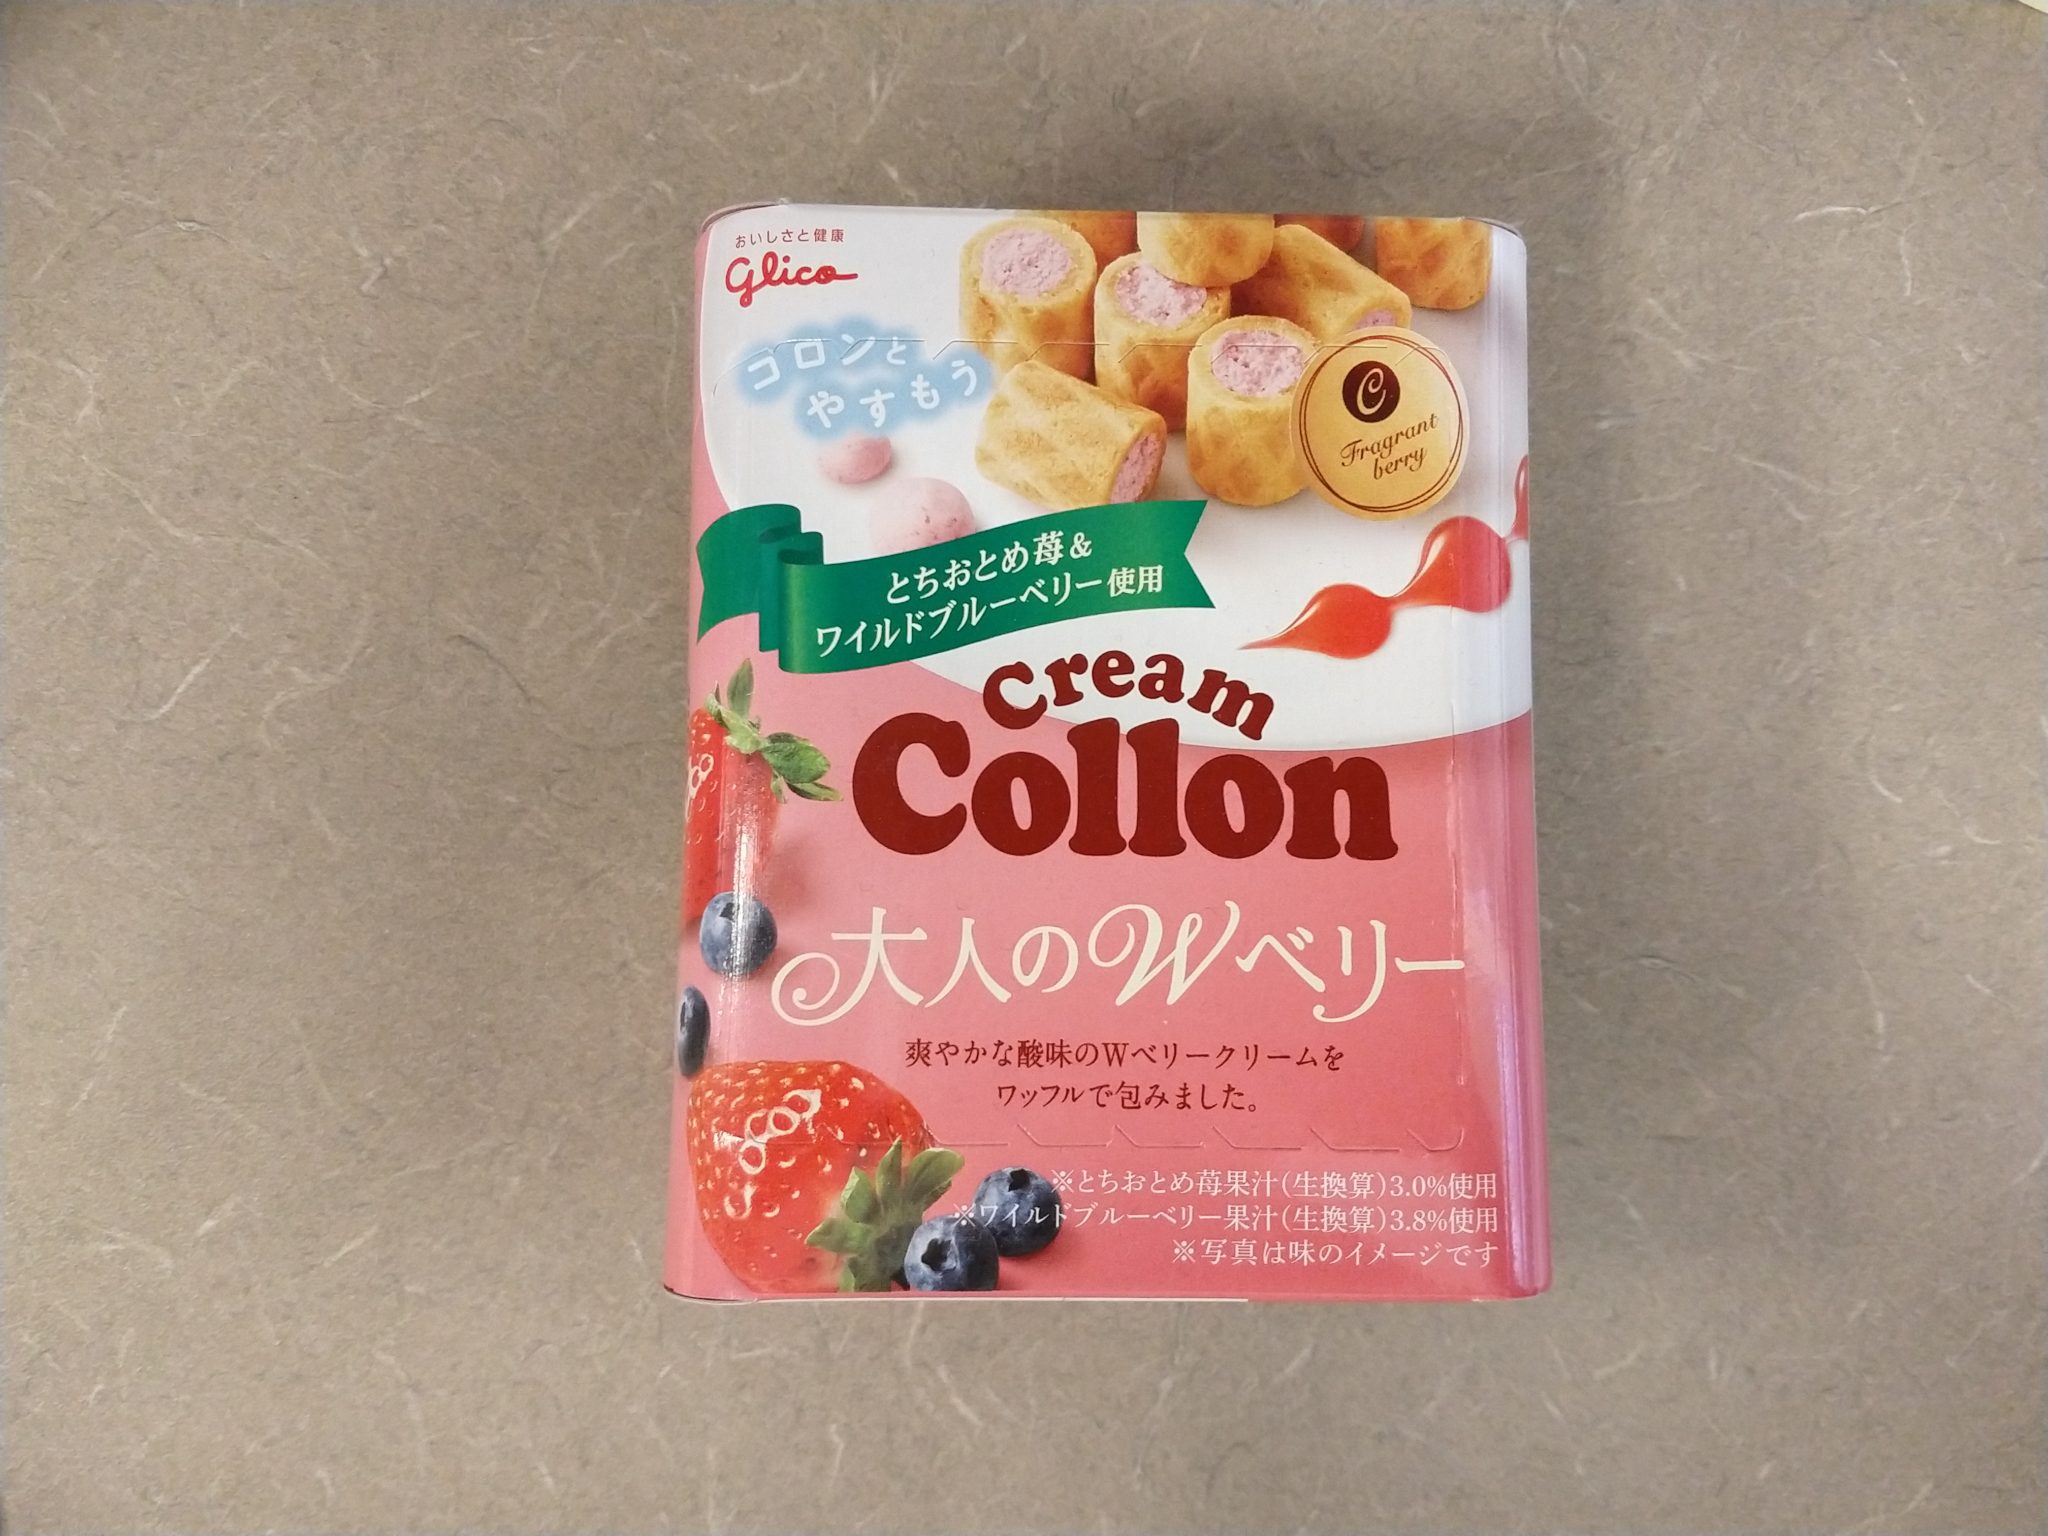 Cream Collon – Double Berry